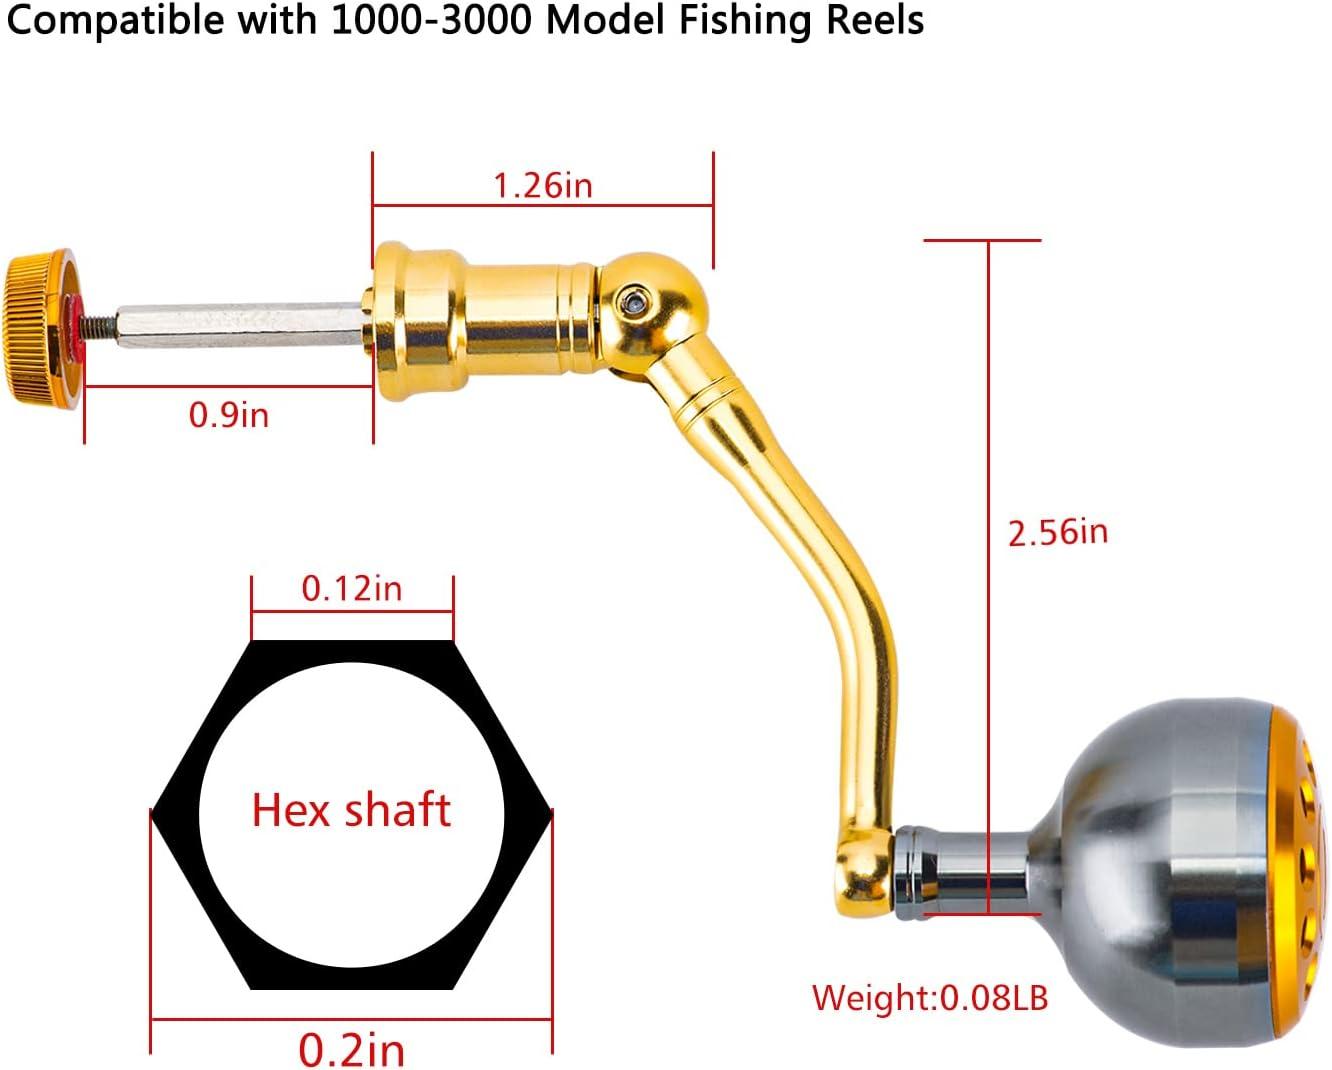 Goture Spinning Reel Handle Metal Reel Replacement Handle Rocker Arm Grip  with Round Power Knob Fishing Reel Handle Gold 02 Medium